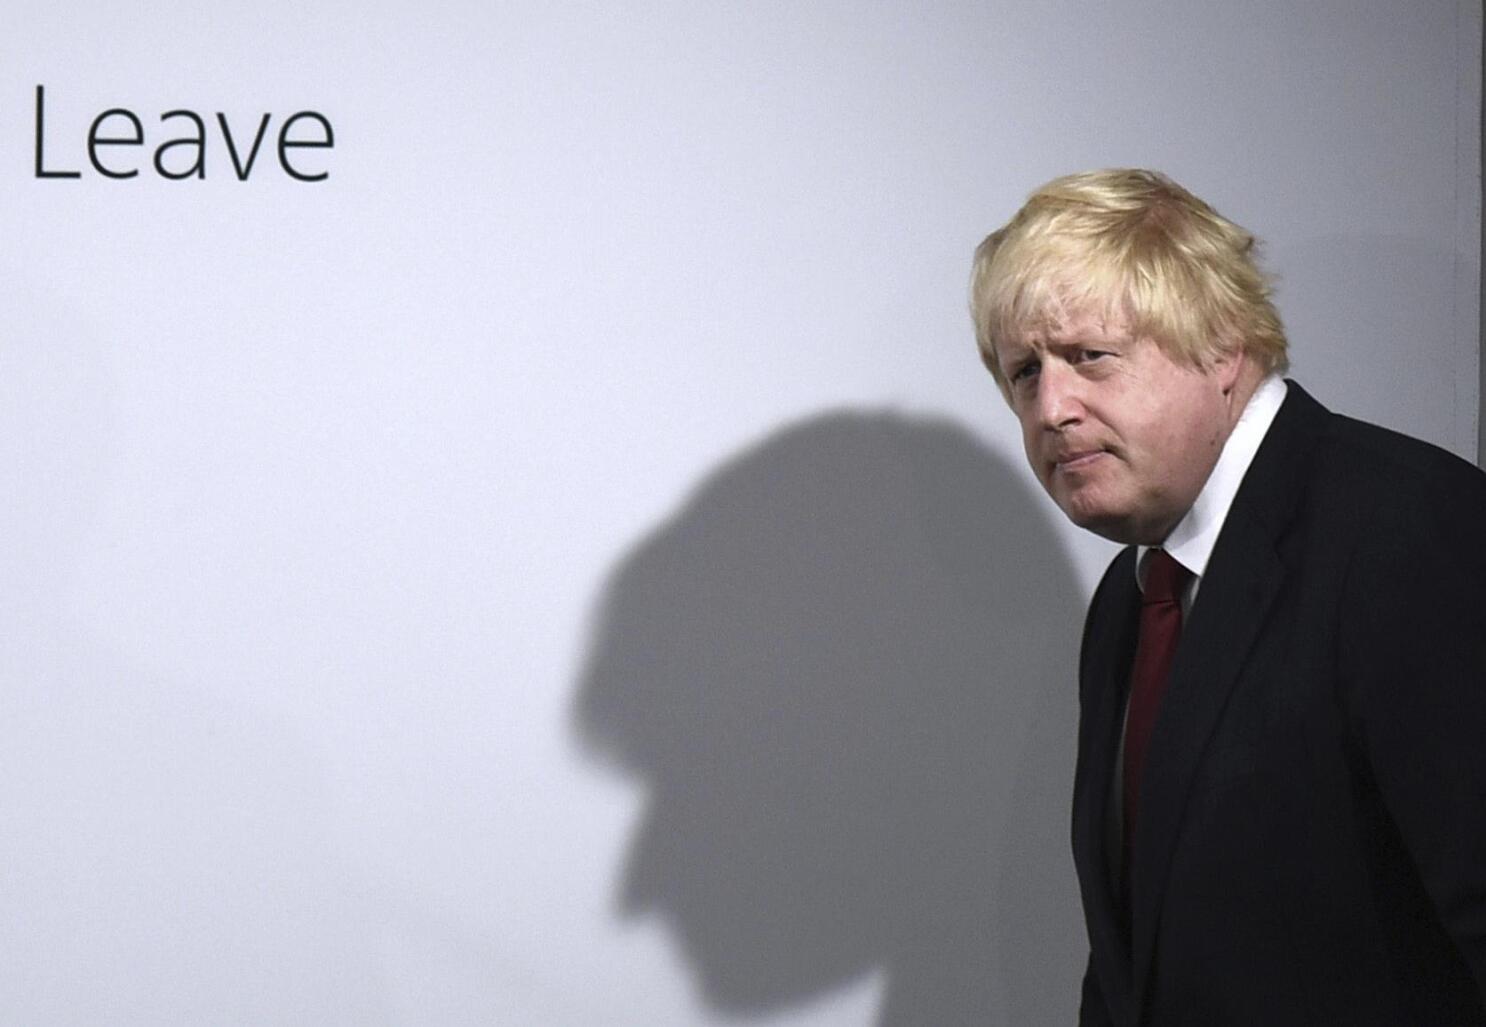 Cameron puts Boris Johnson's brother into No 10